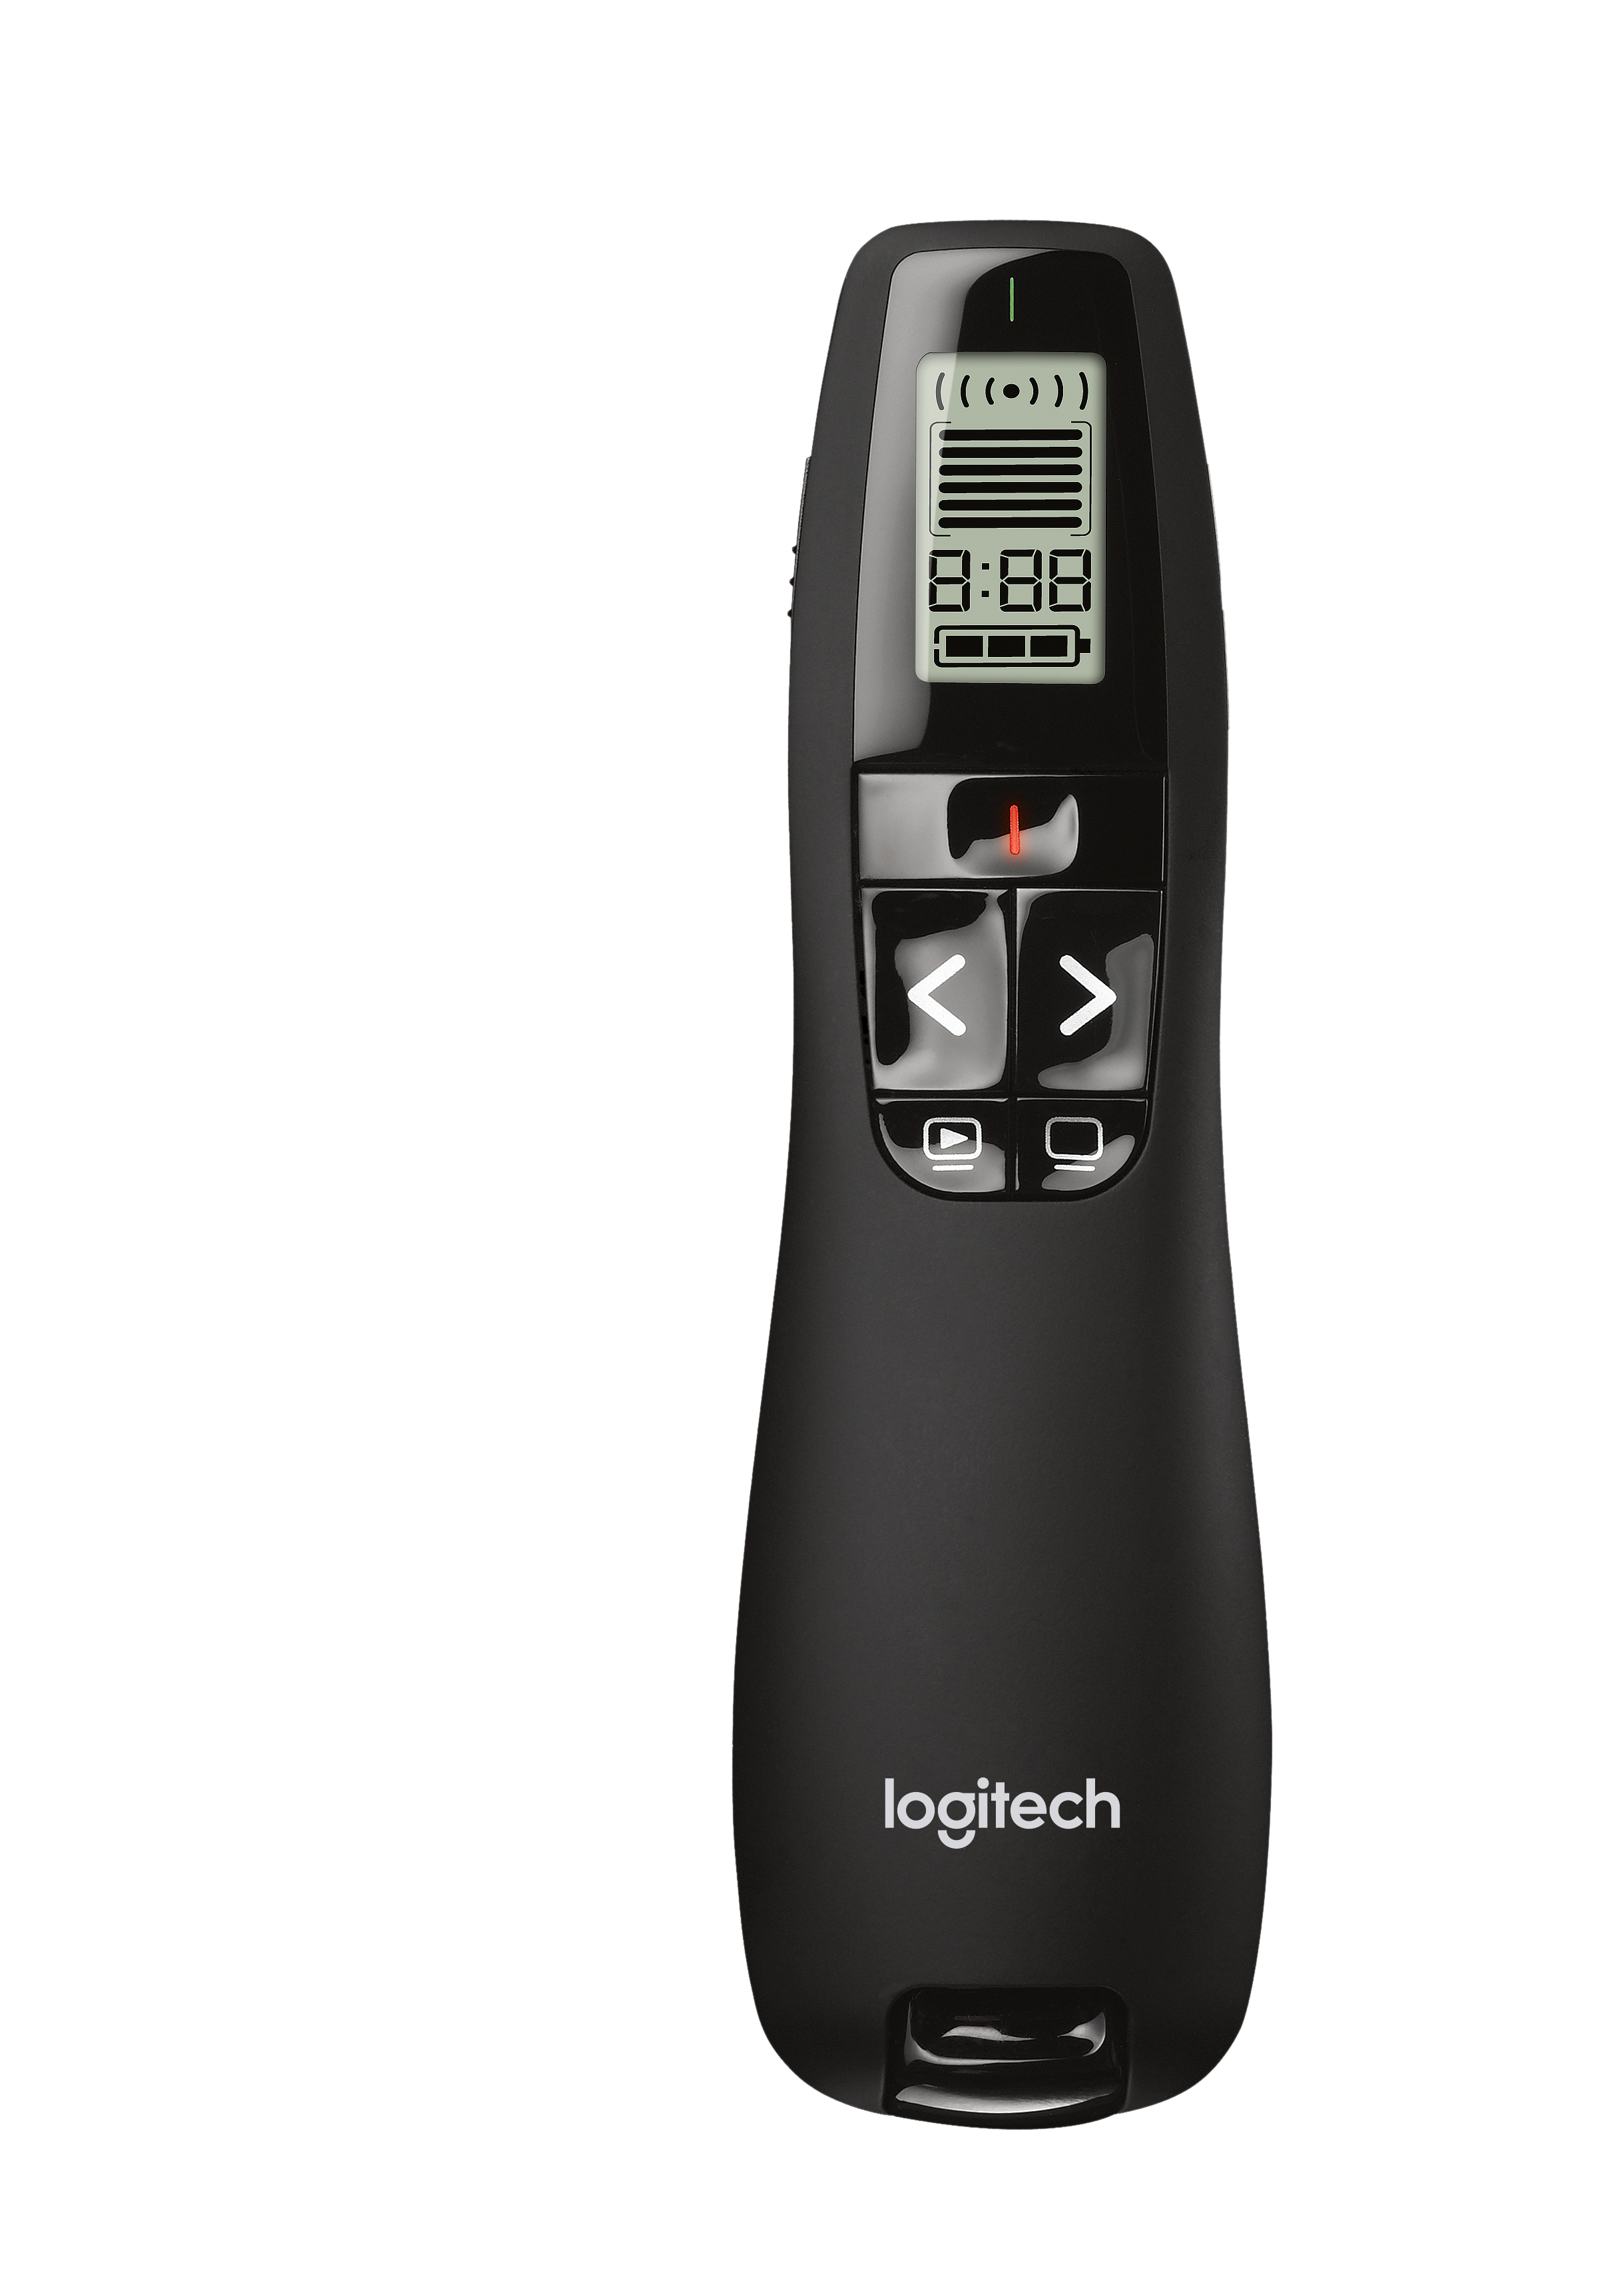 Logitech Presenter R700 Professional